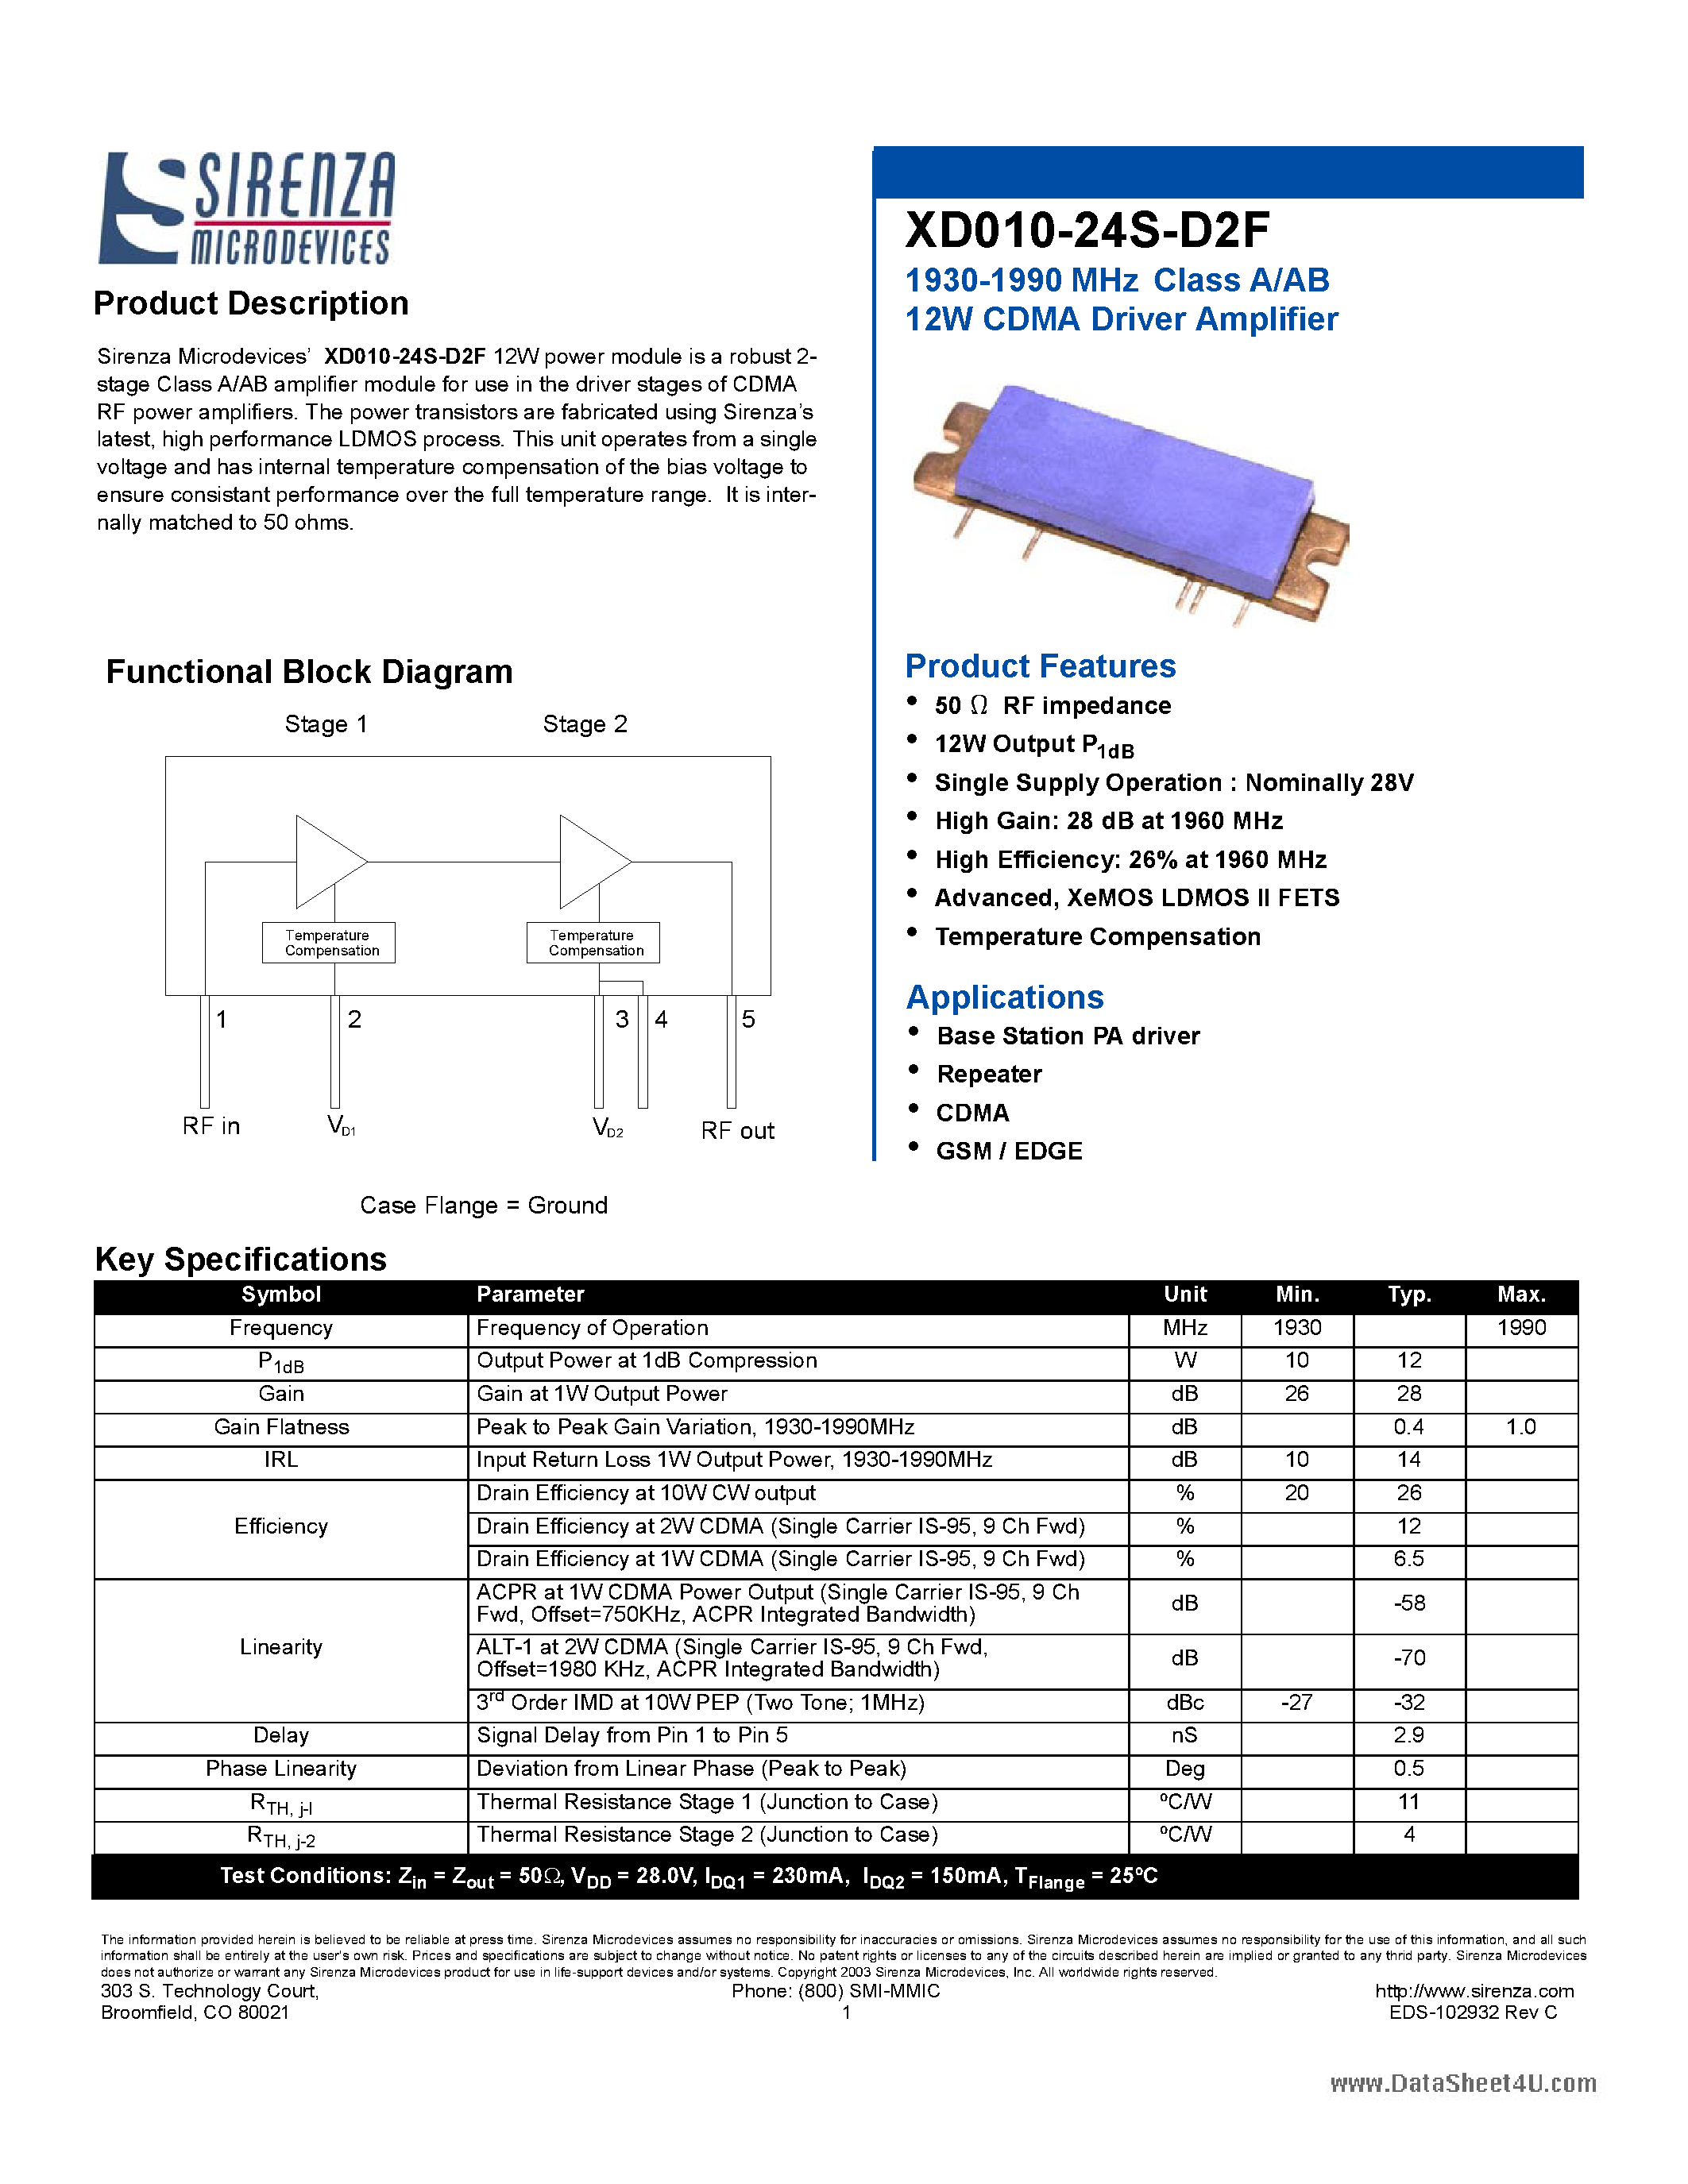 Datasheet XD010-24S-D2F - Class A/AB 12W CDMA Driver Amplifier page 1